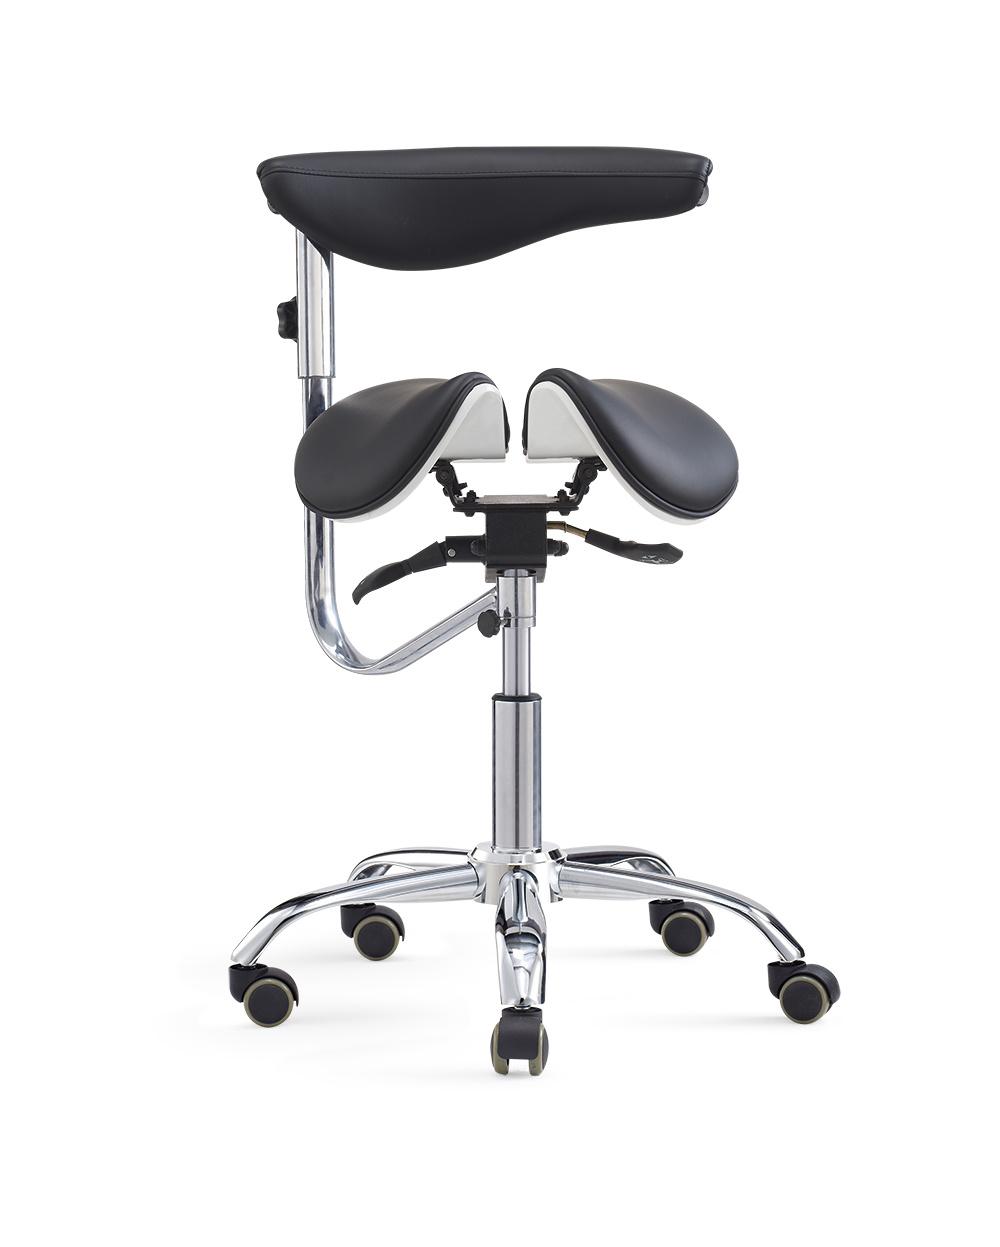 Ergonomic Swivel Dental Chair Saddle Doctor′s Stool Adjustable Armrest in PU or Real Leather